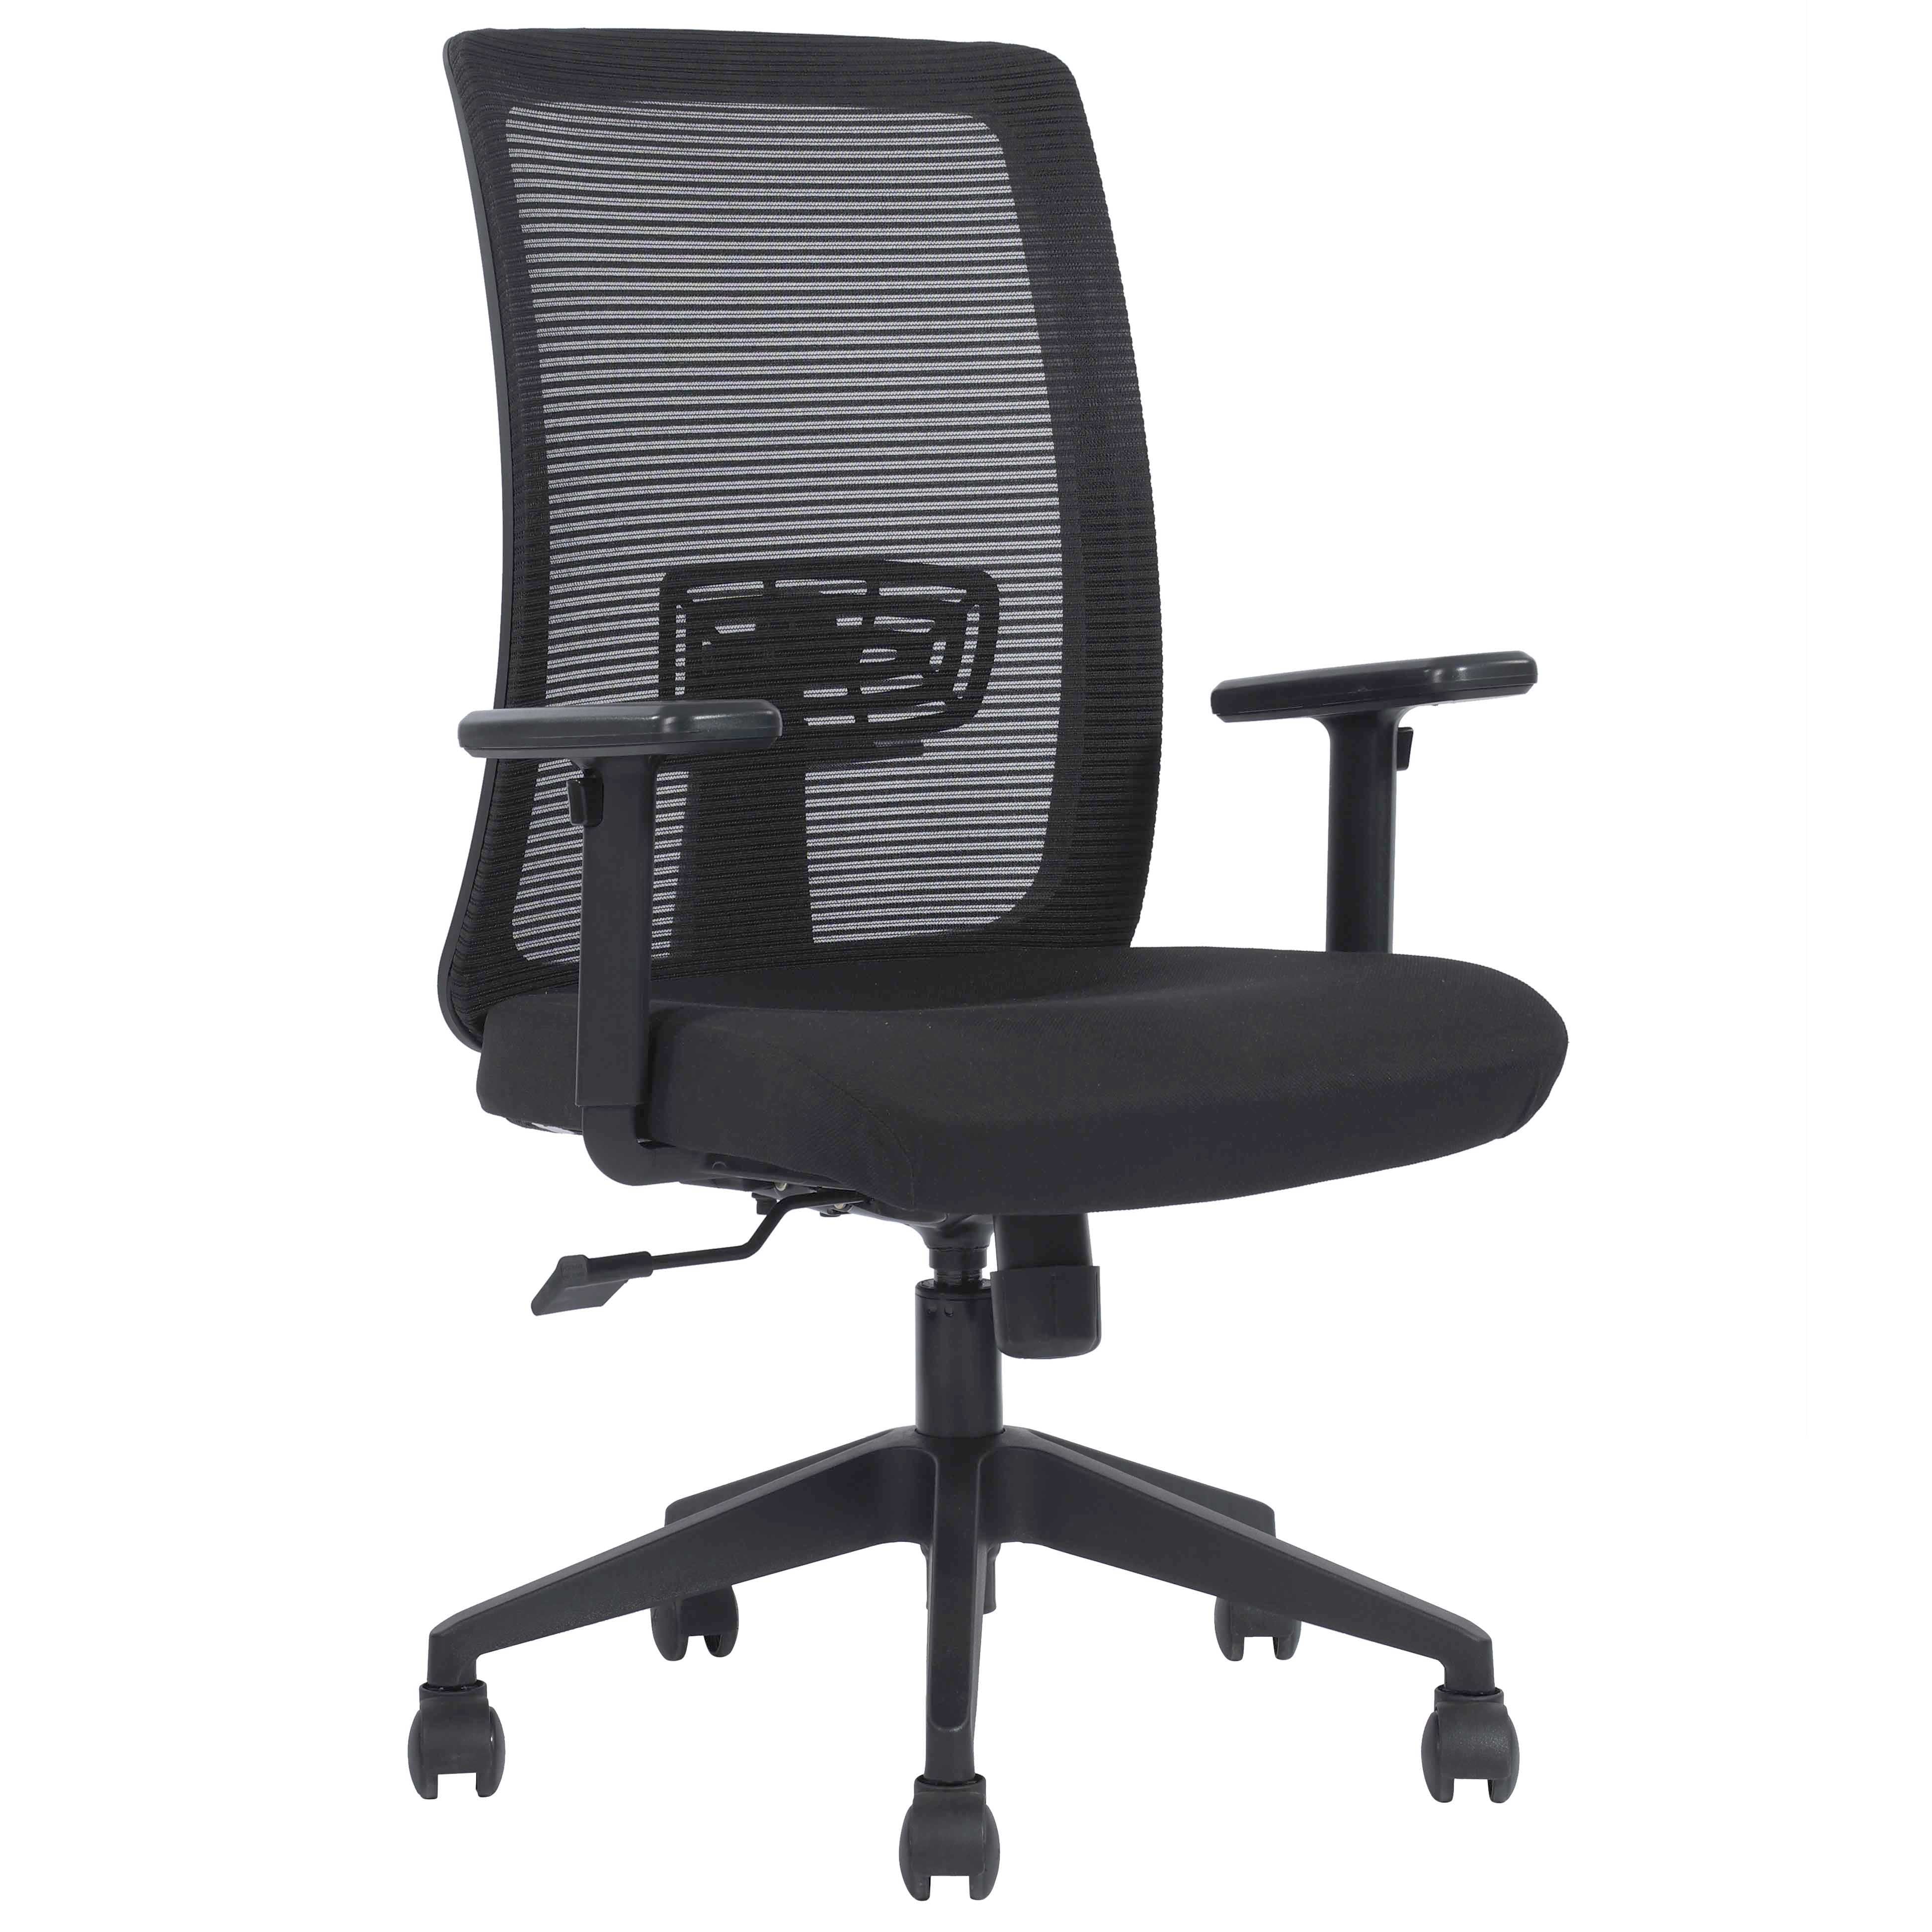 Diego Workstation Office Chair - Black Chair urbancart